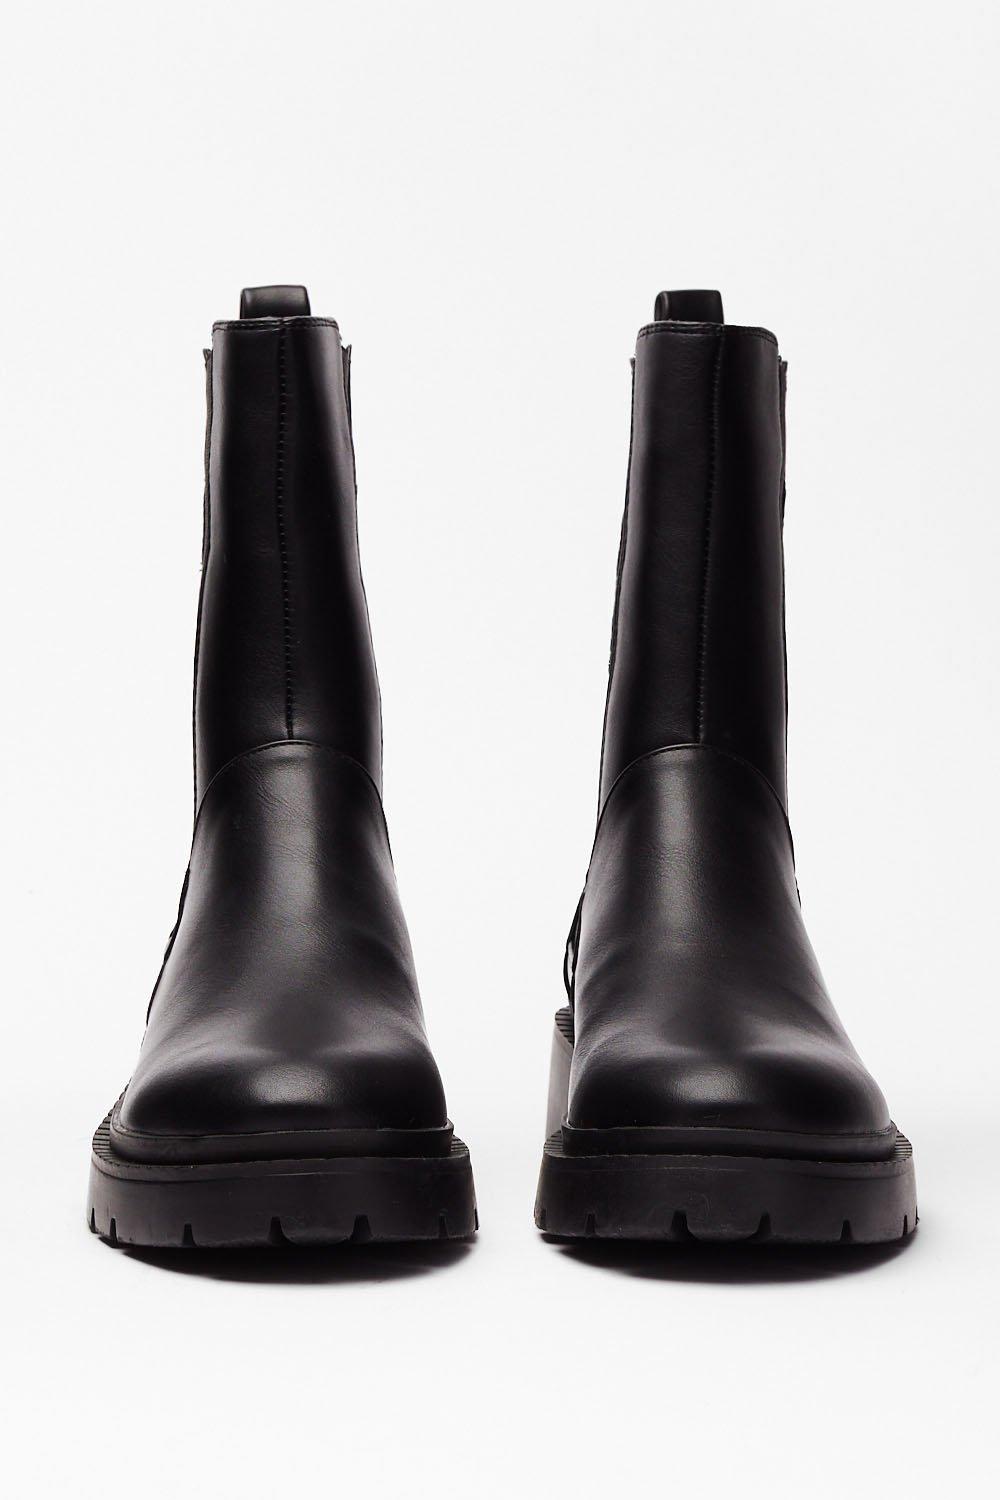 thorogood moc toe waterproof boots